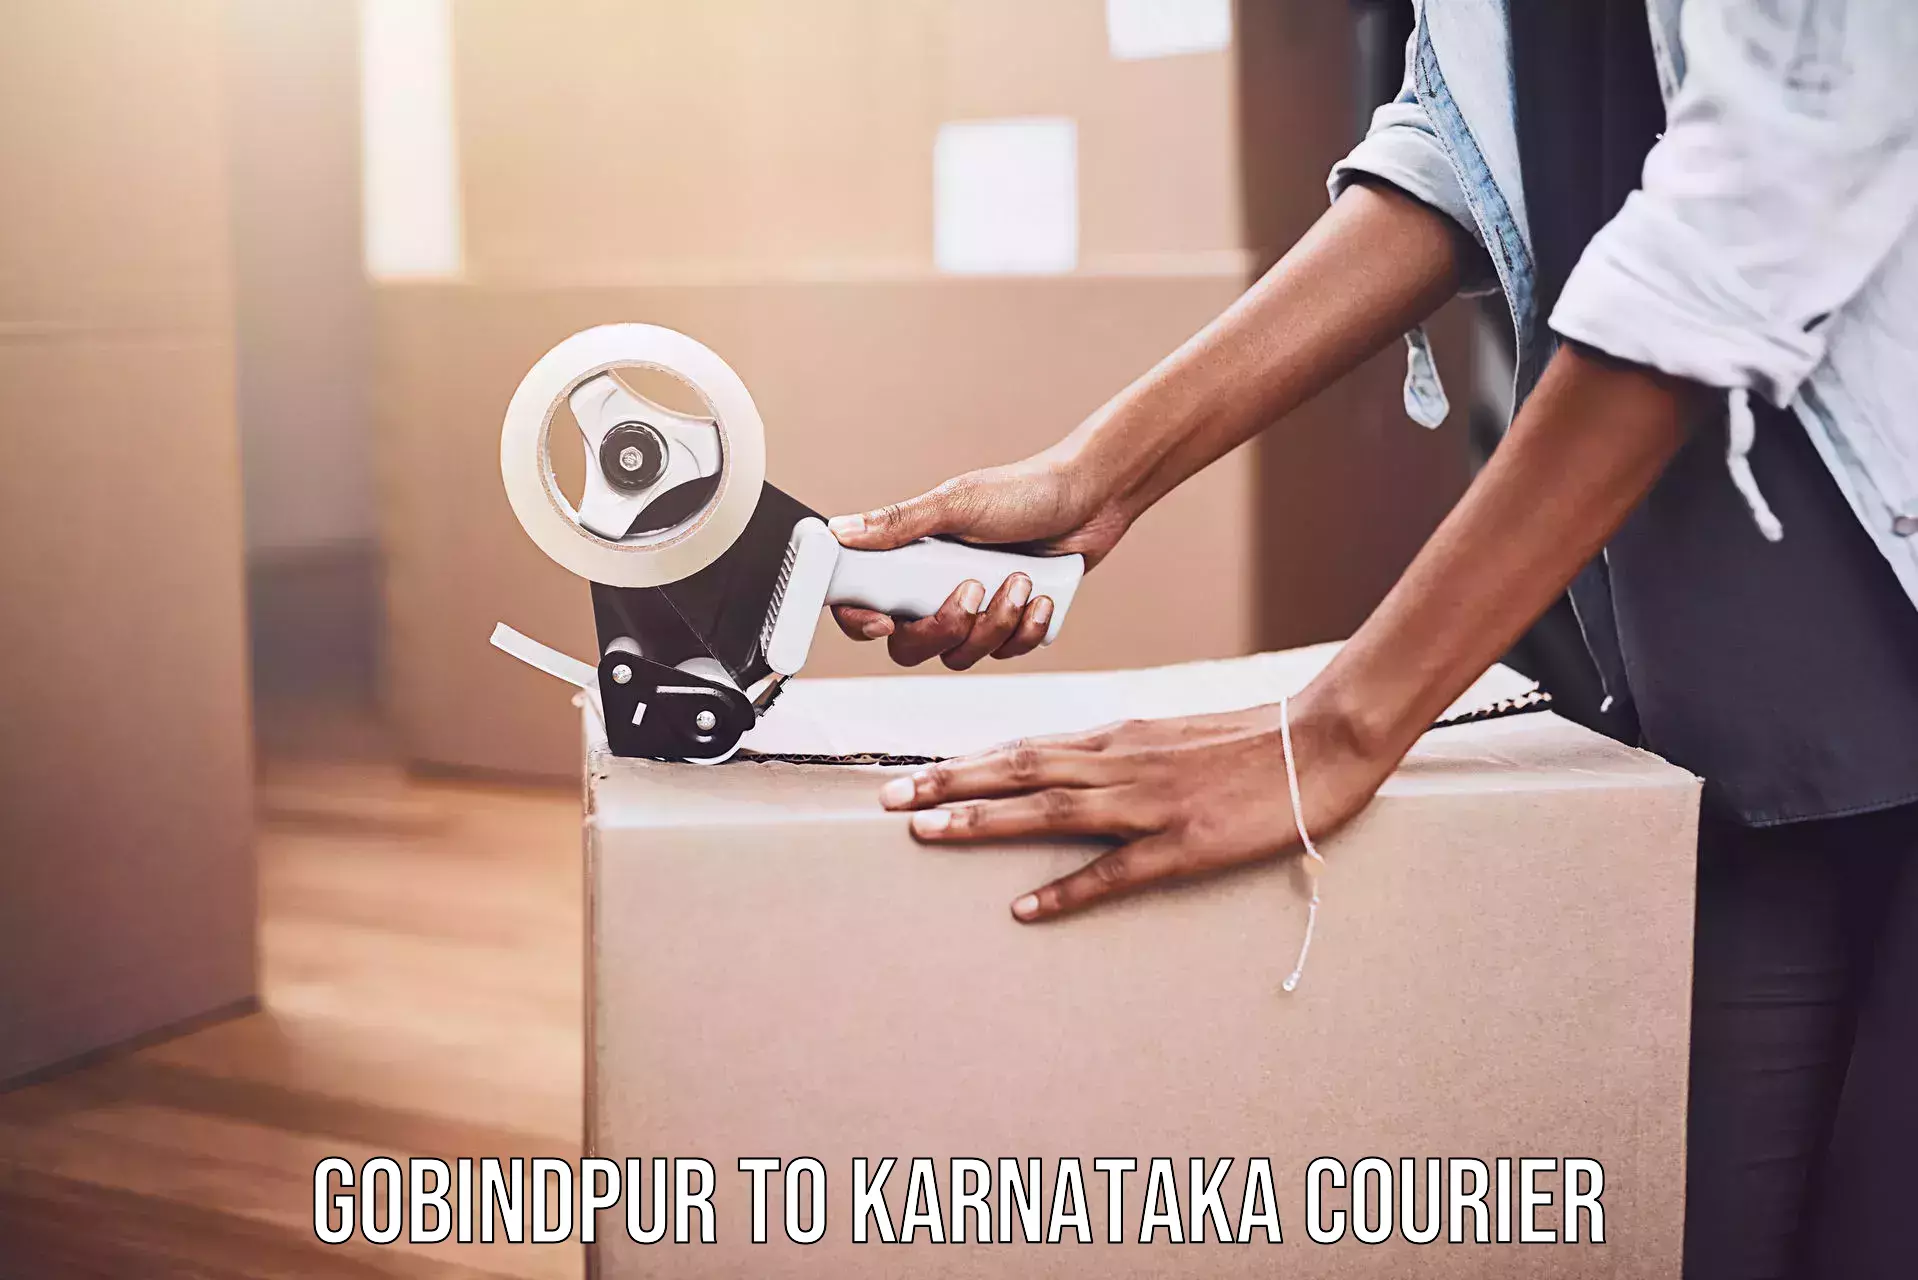 User-friendly courier app Gobindpur to Karnataka